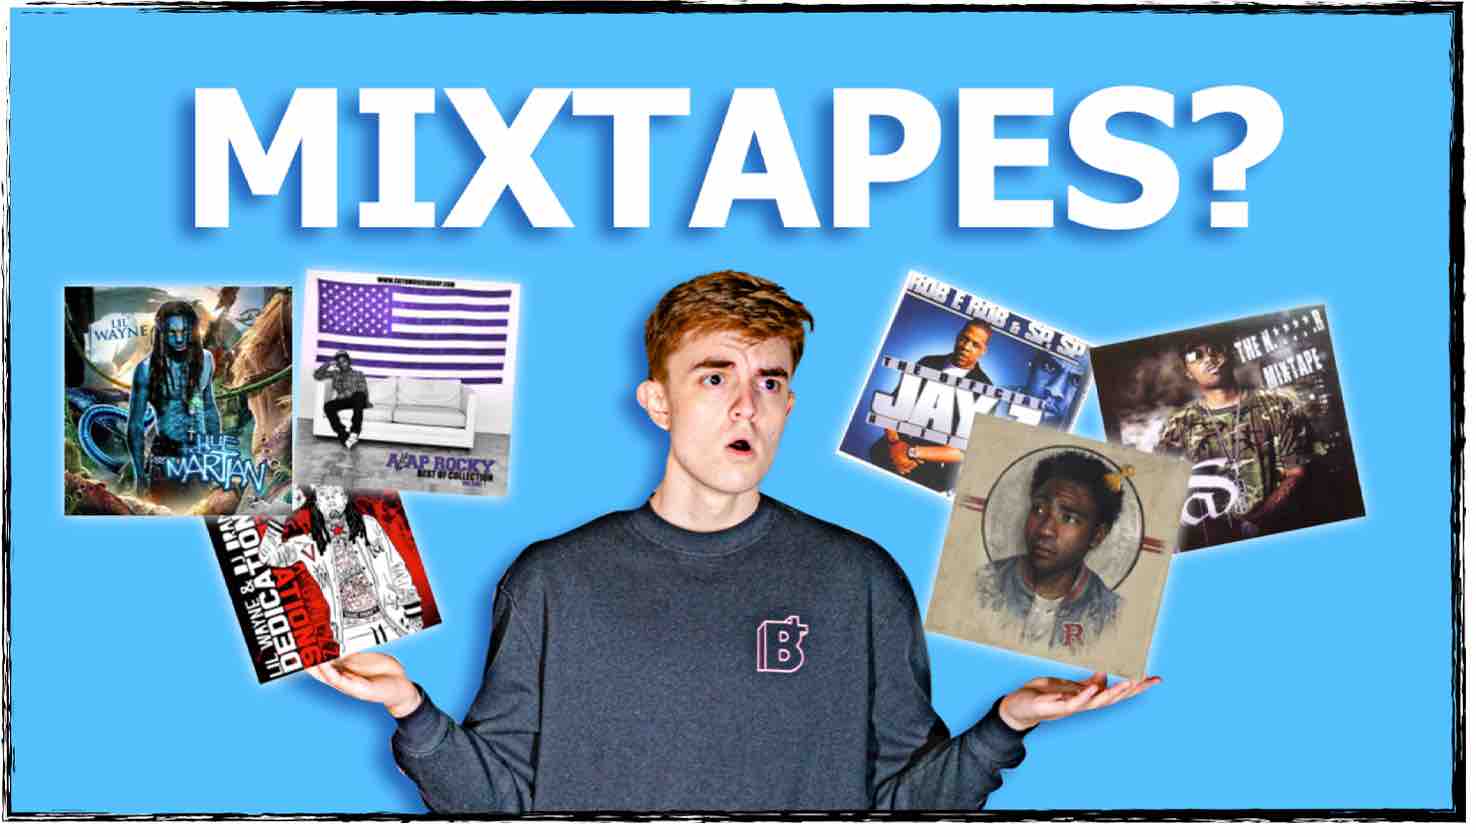 Rise of mixtapes